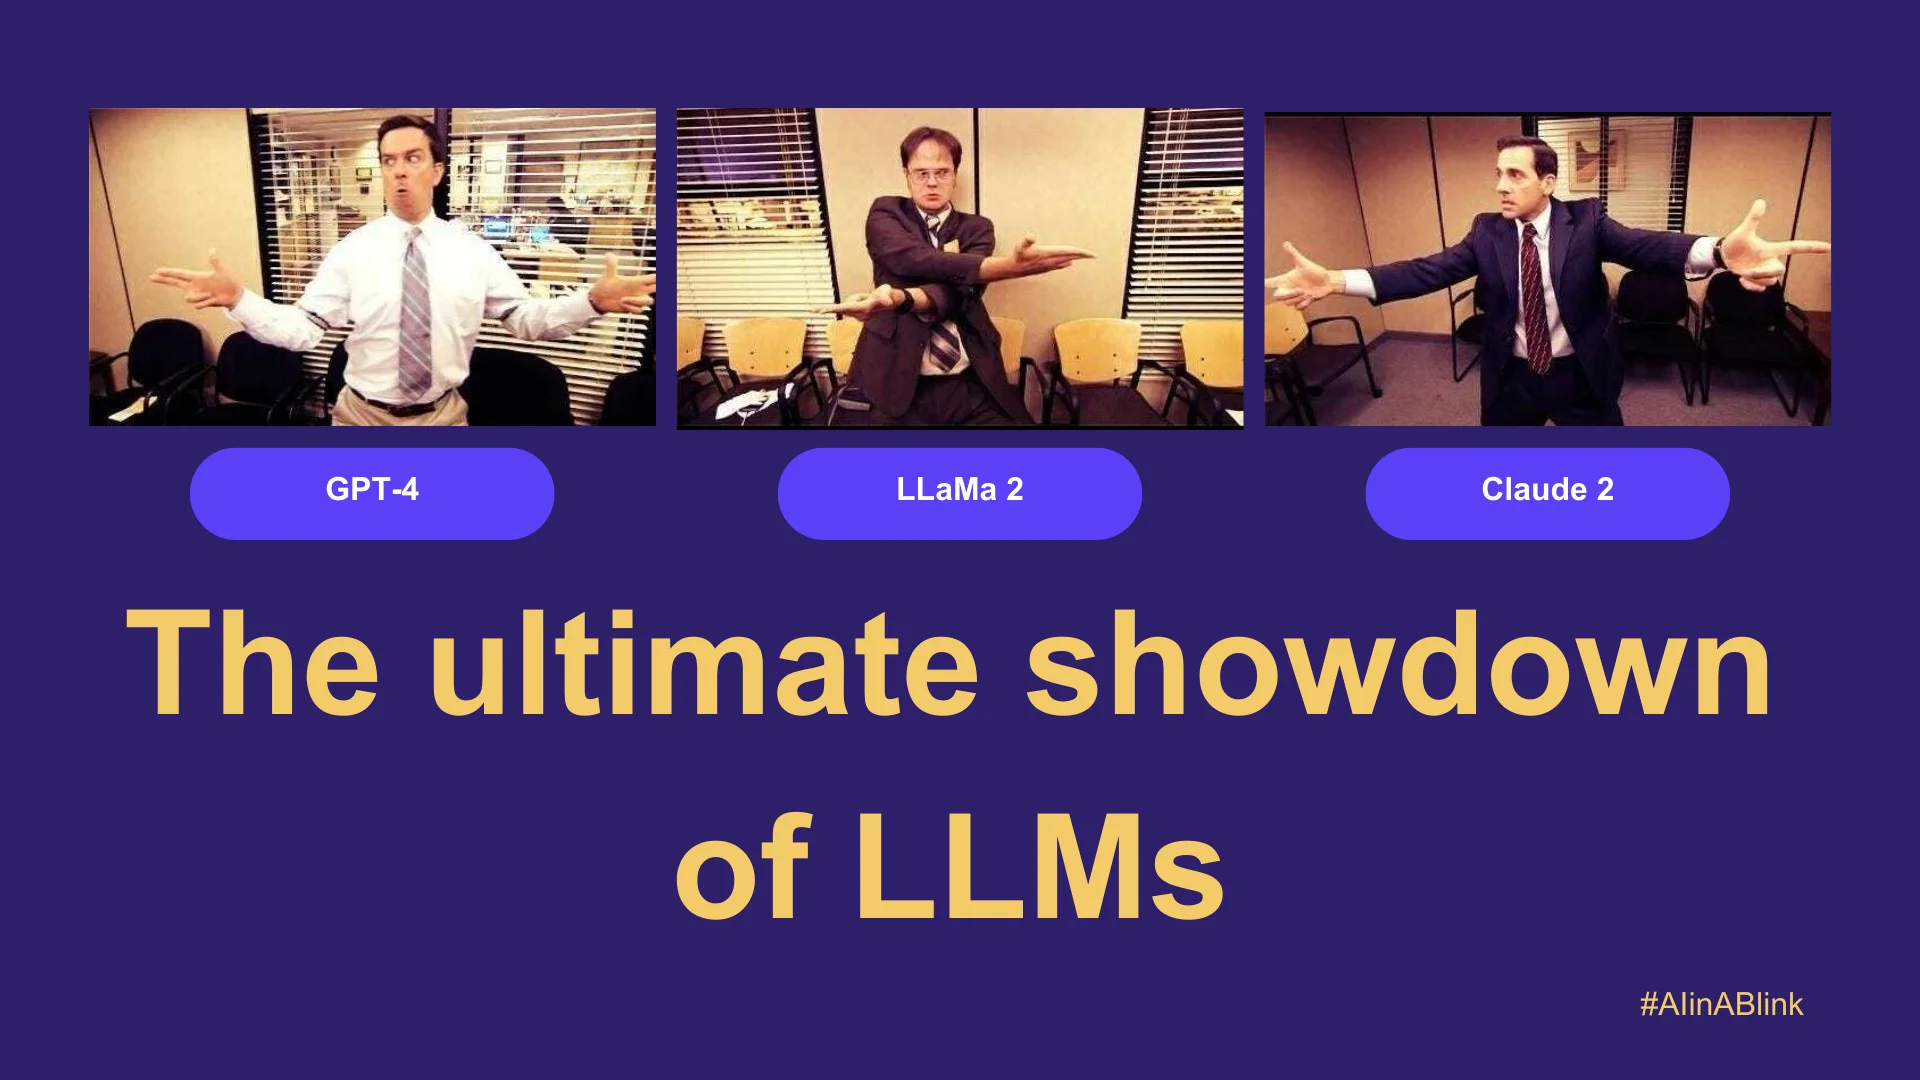 AI in a Blink - Ultimate showdown of LLMs